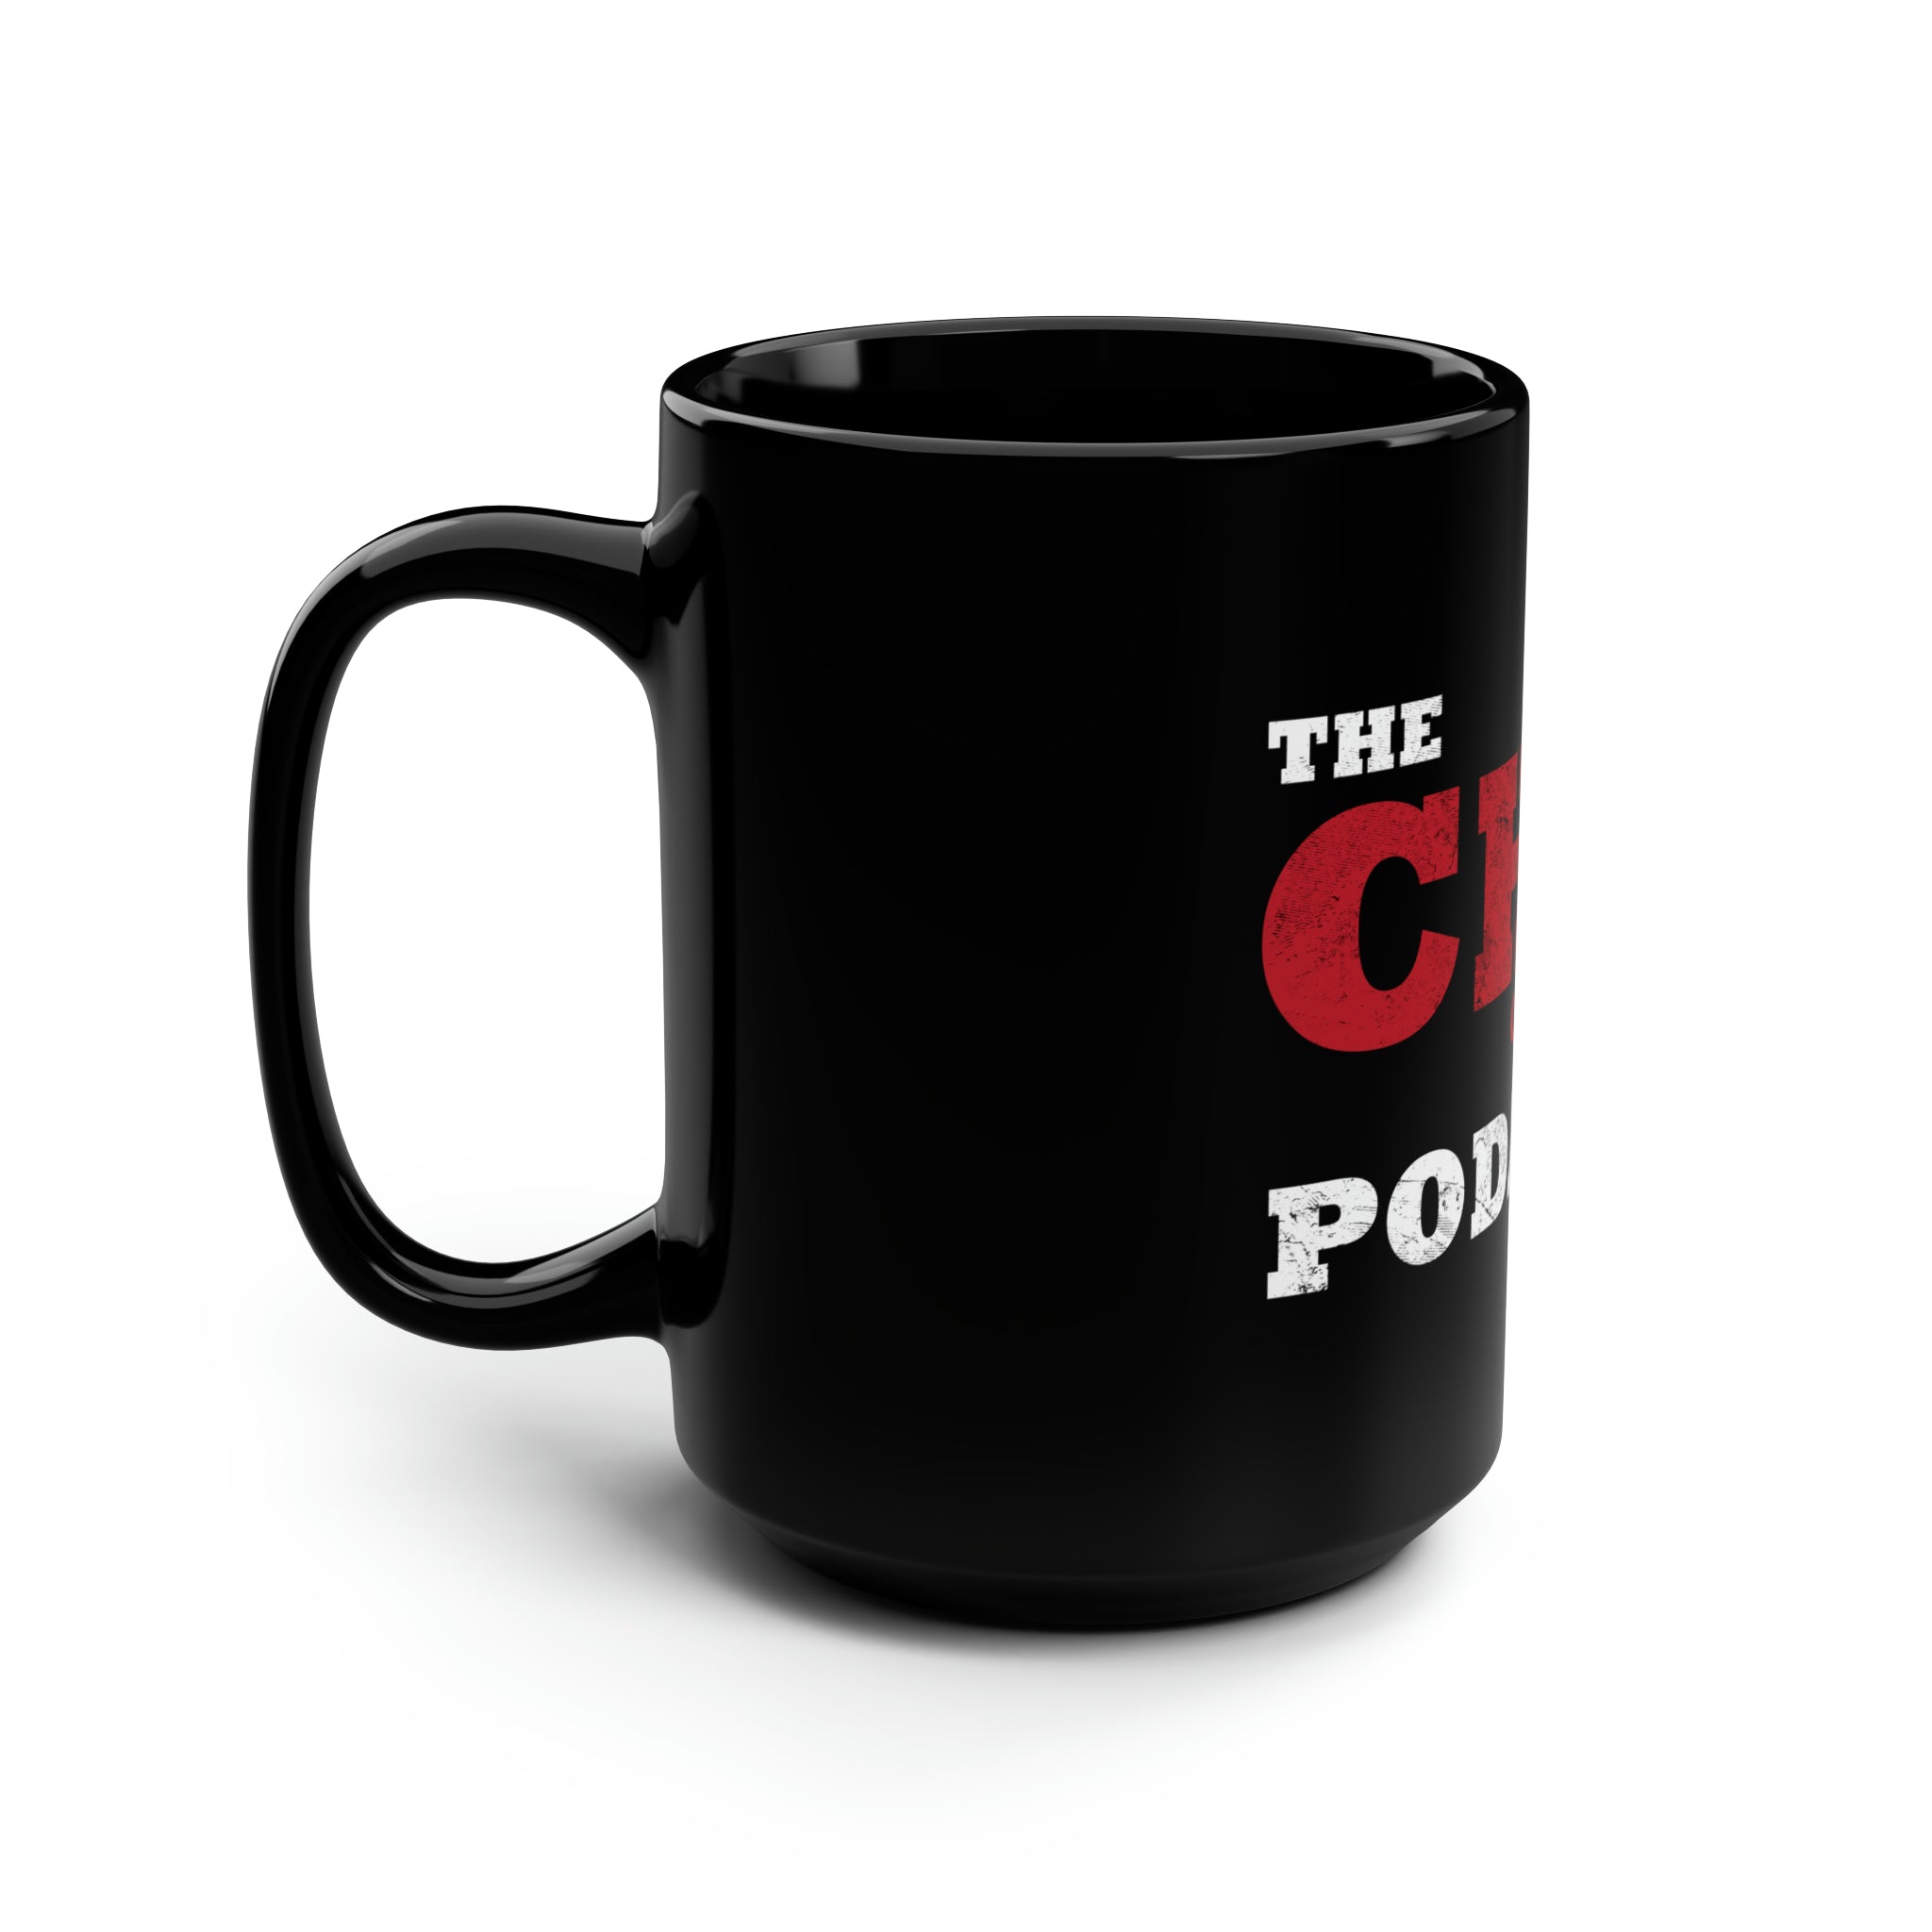 Chip Chipperson peckah Juice Coffee Mug 11oz 